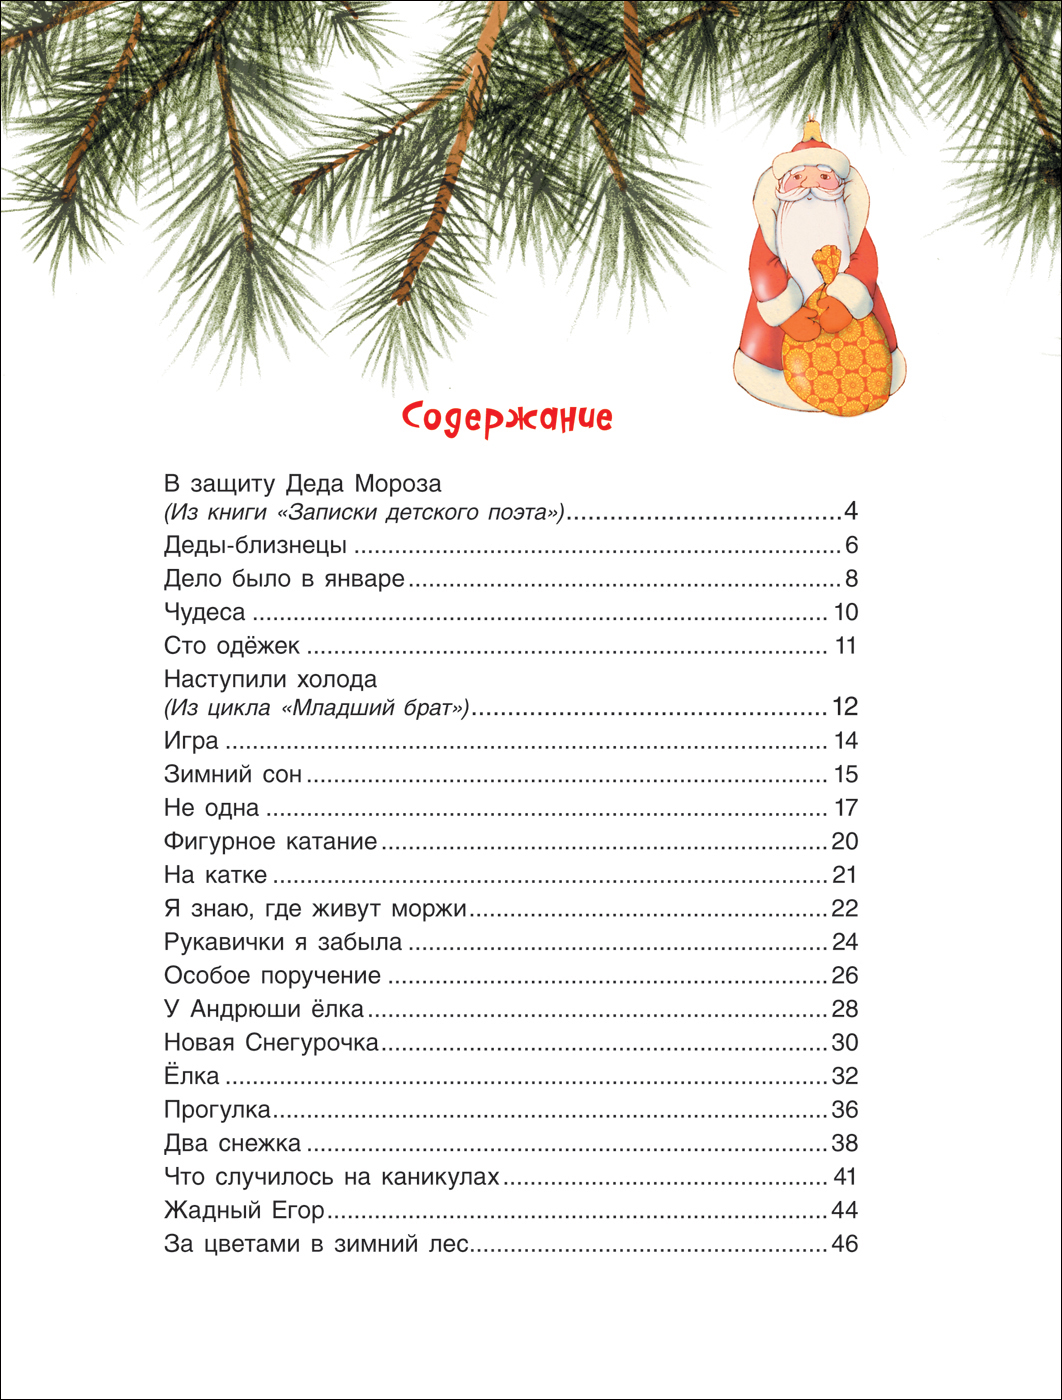 Сборник стихов А. Барто - В защиту Деда Мороза  